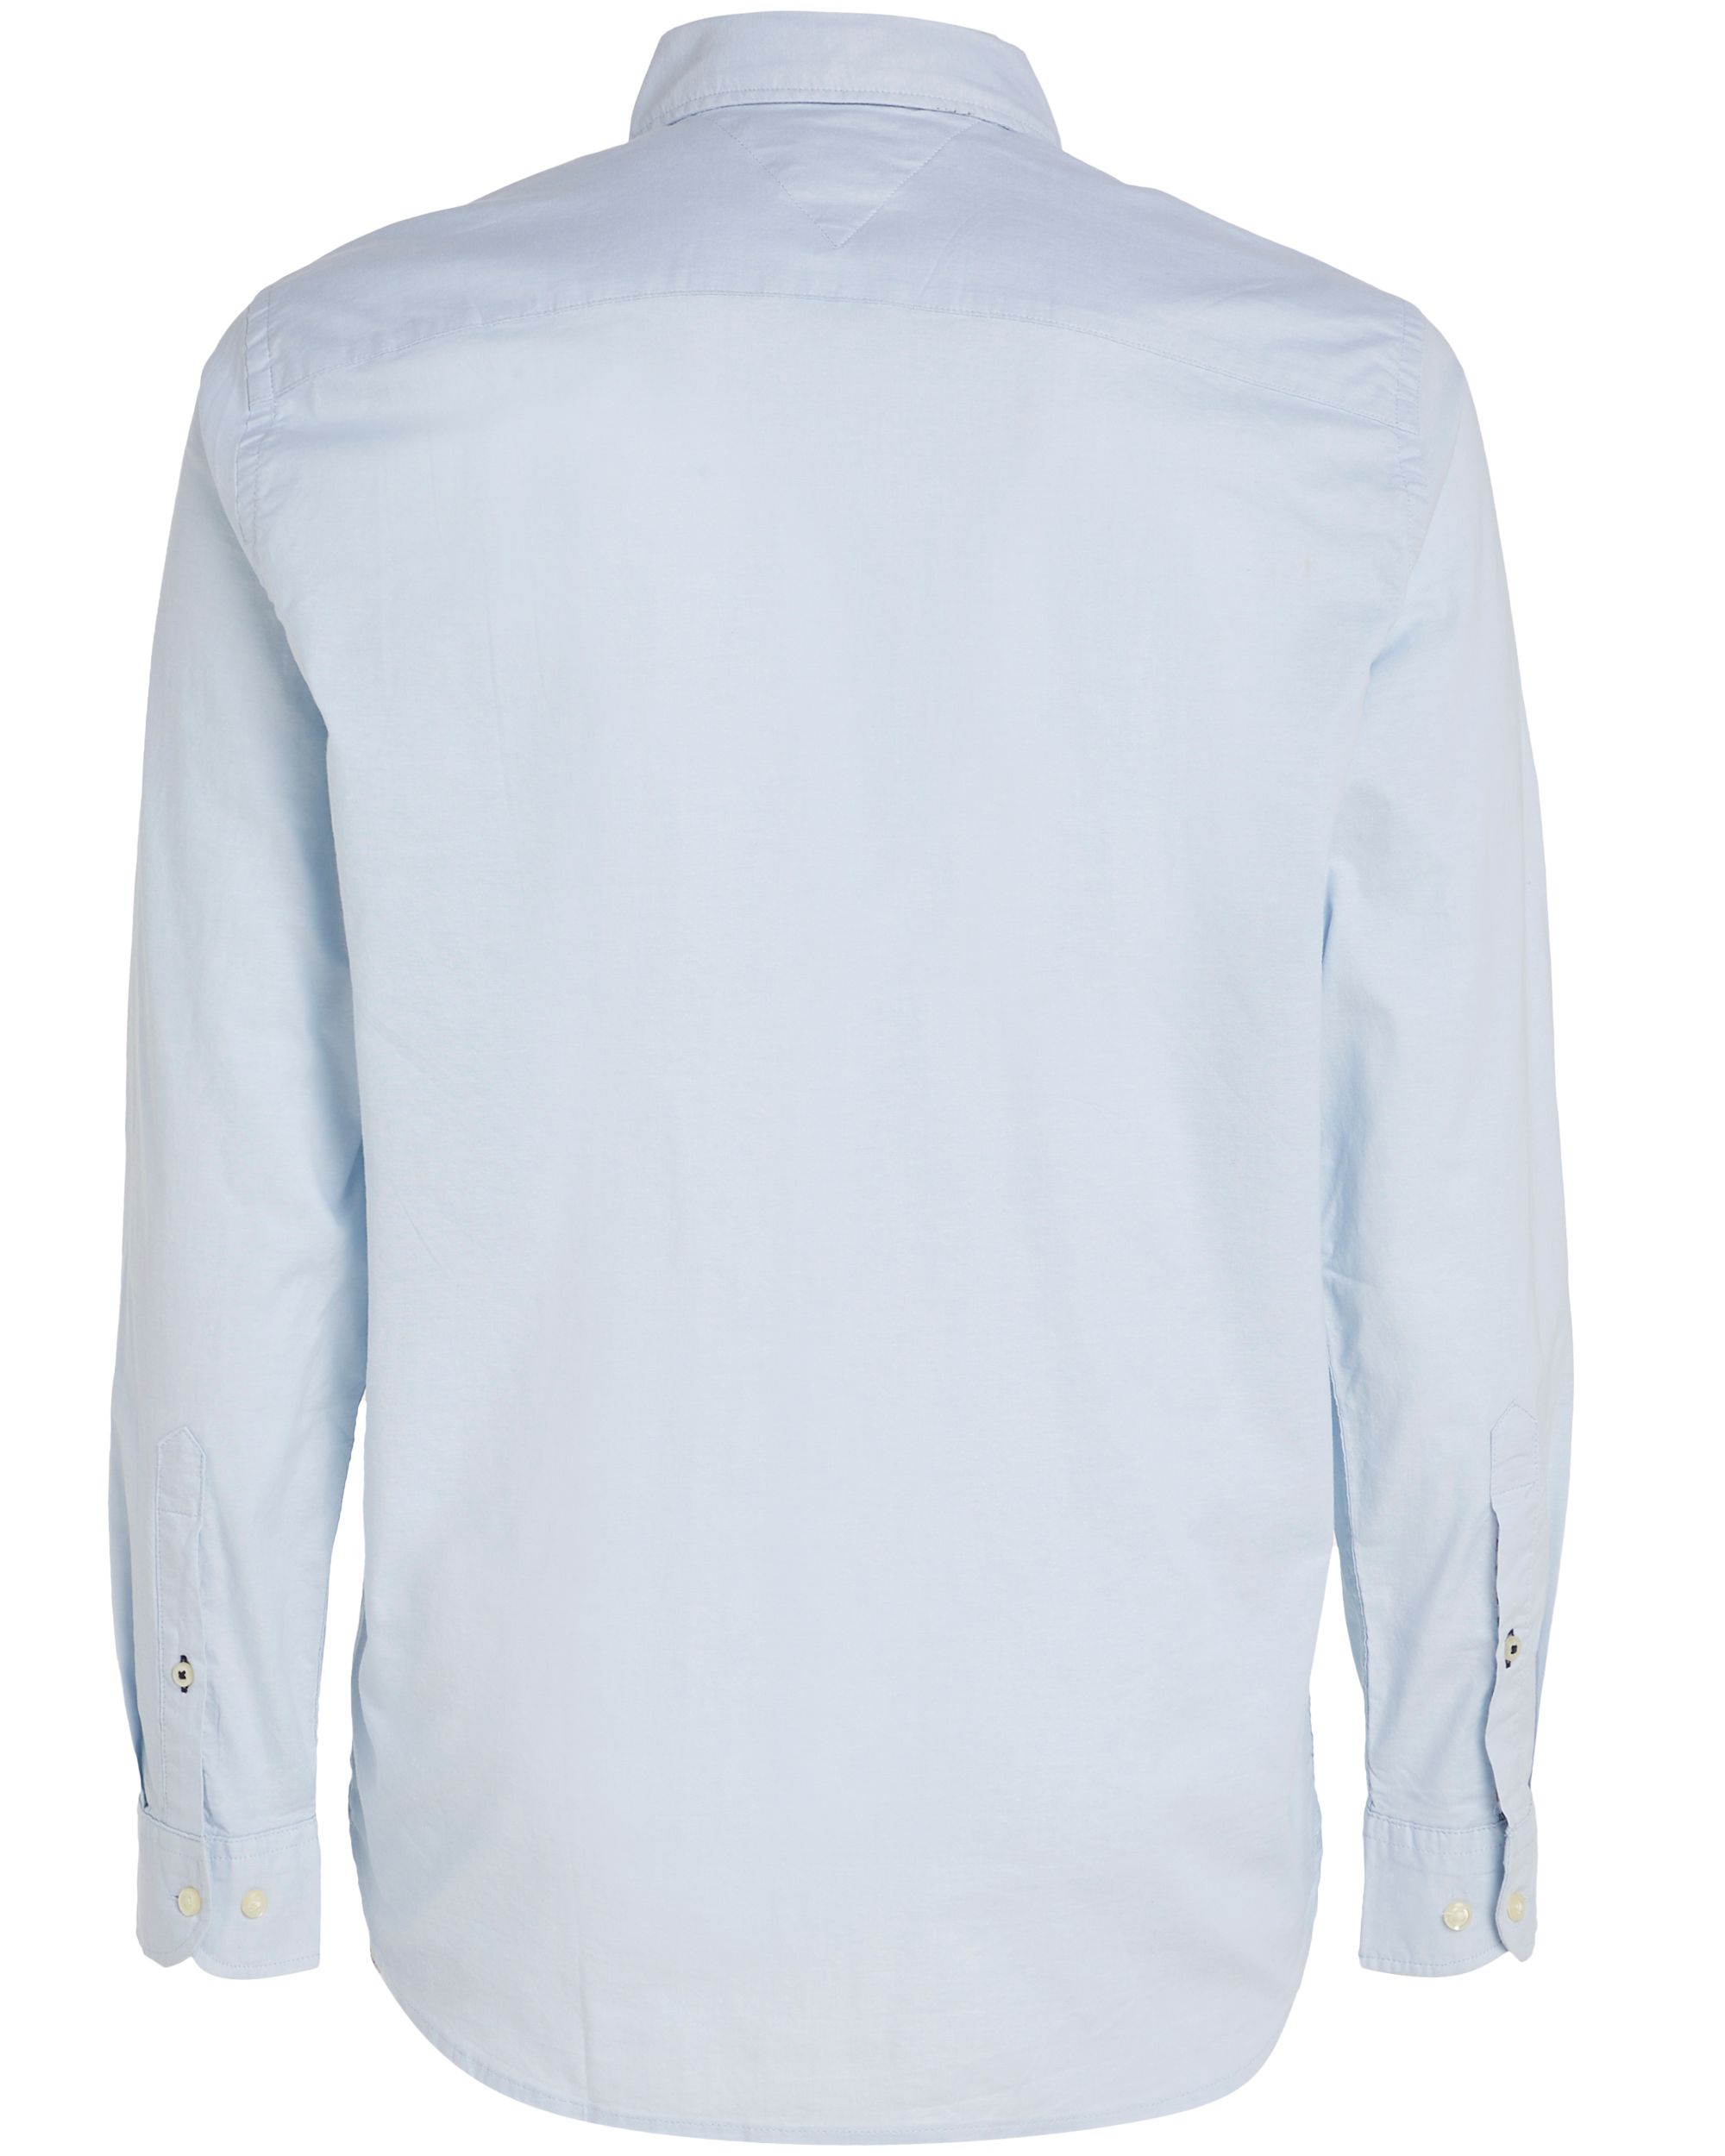 Tommy Hilfiger Menswear Casual Overhemd LM Blauw 092597-001-L